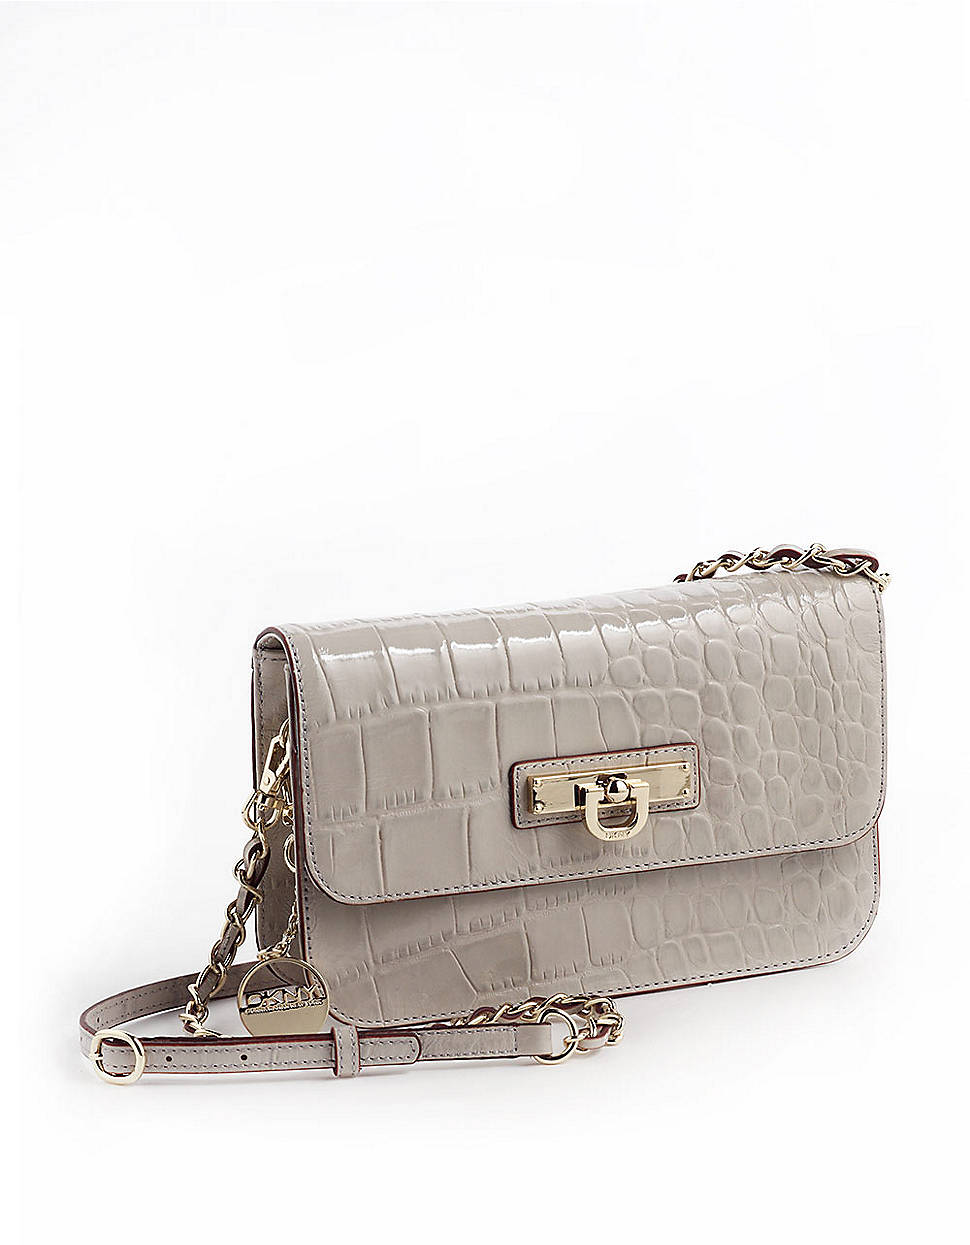 Dkny Patent Leather Flap Crossbody Handbag in Gray (grey) | Lyst